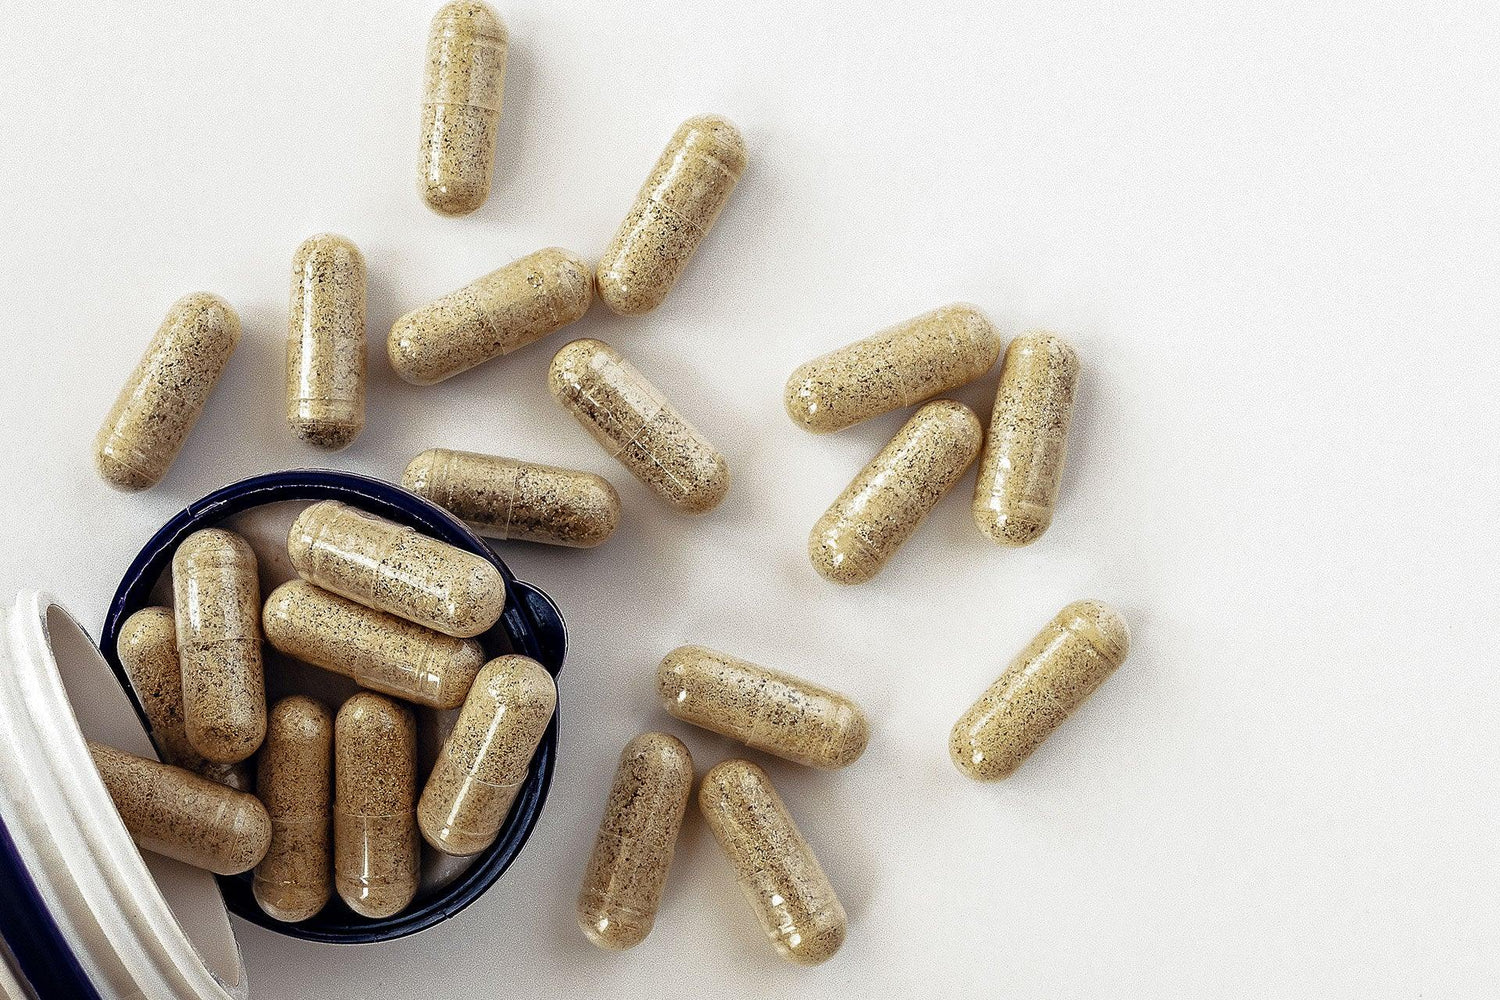 Overhead closeup of herbal capsule supplements